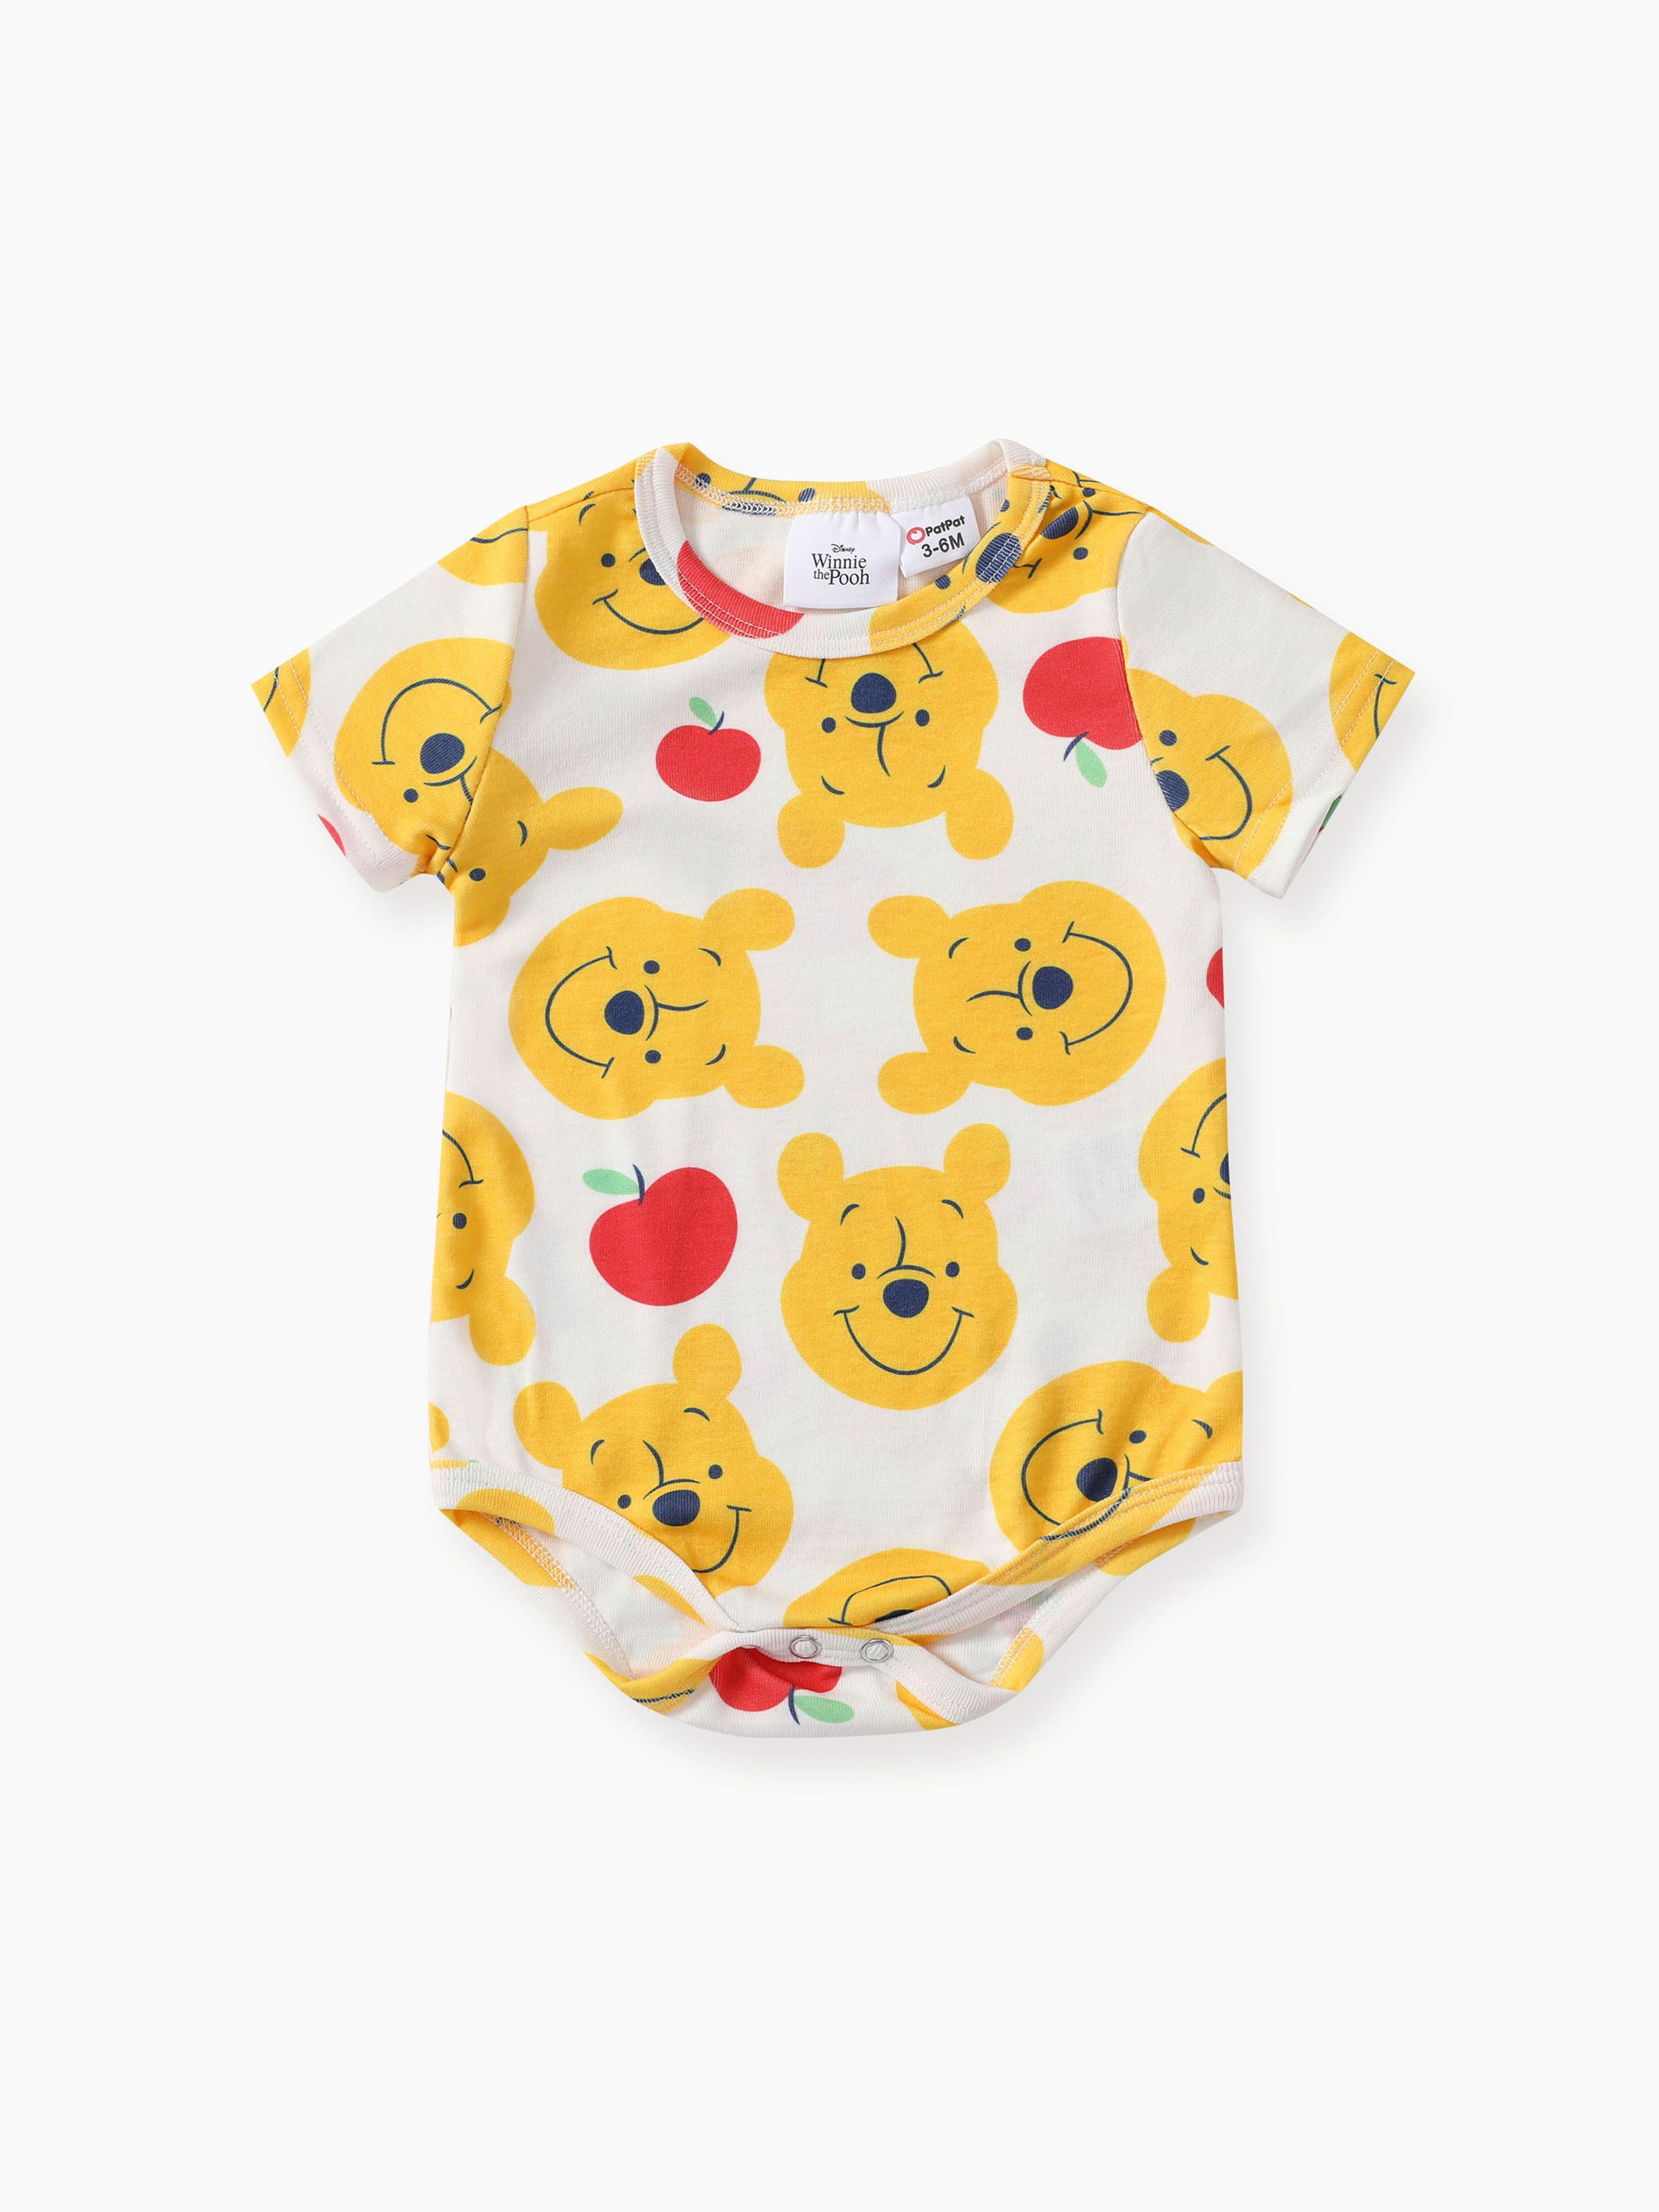 Disney Winnie the Pooh Baby Boys/Girls 1pc Naia™ Fun Character Fruit/Striped Print 短袖連體褲